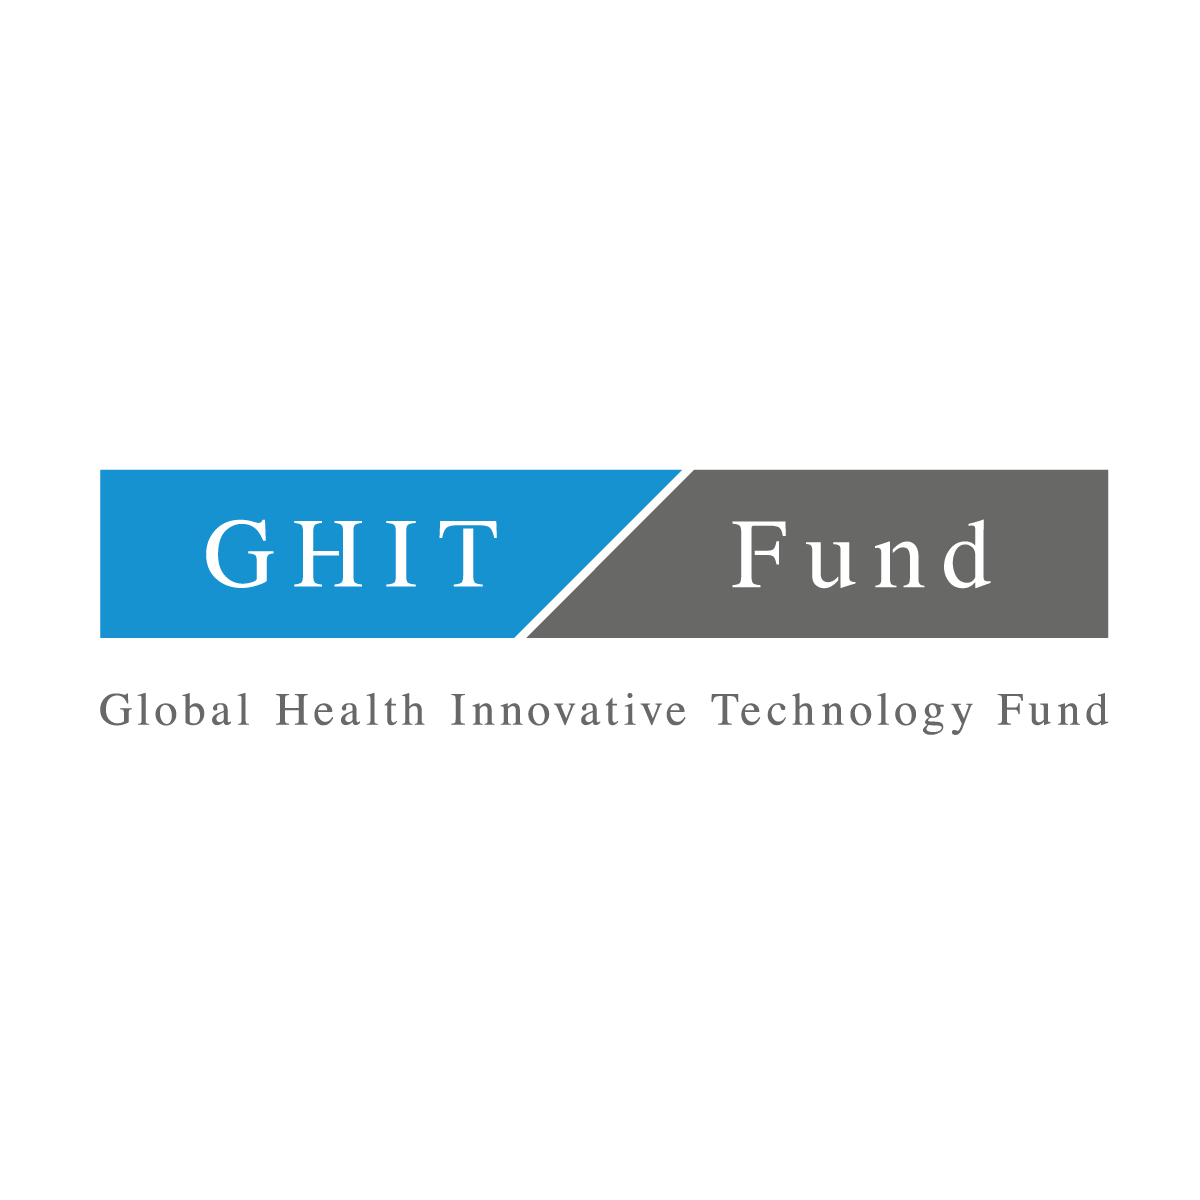 The Global Health Innovative Technology